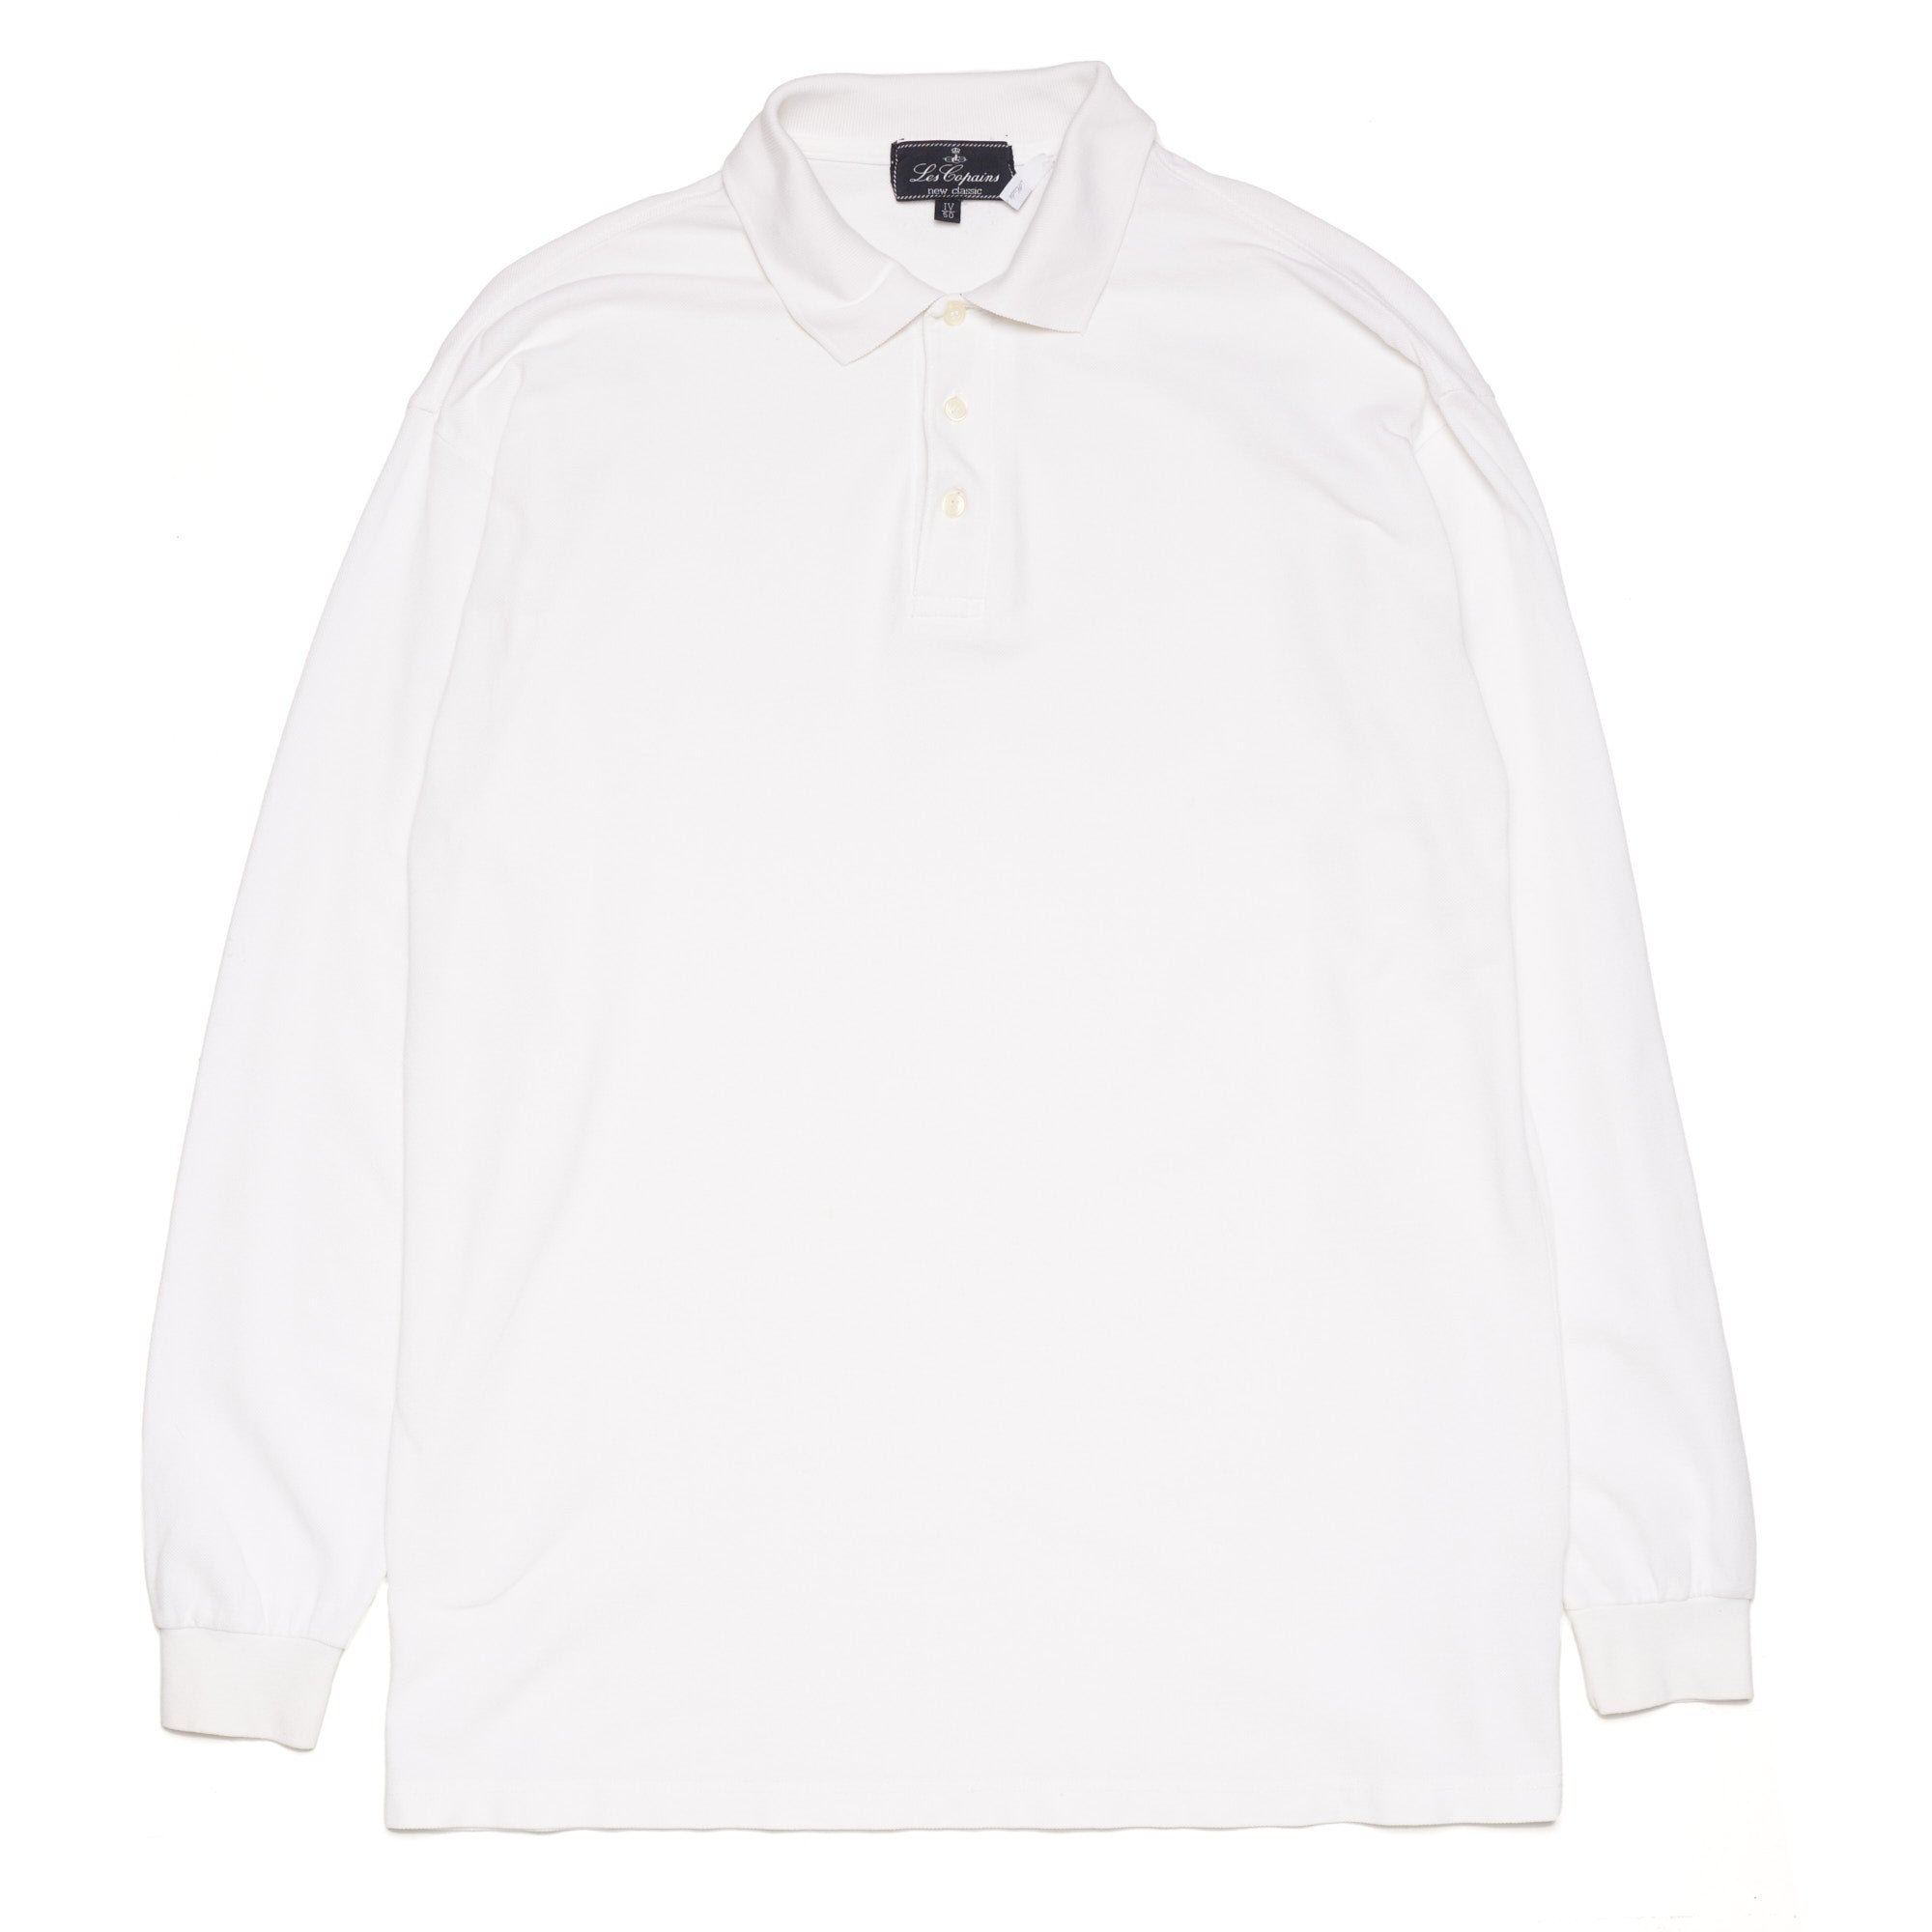 LES COPAINS New Classic Solid White Pique Cotton Long Sleeve Polo Shirt Size XL